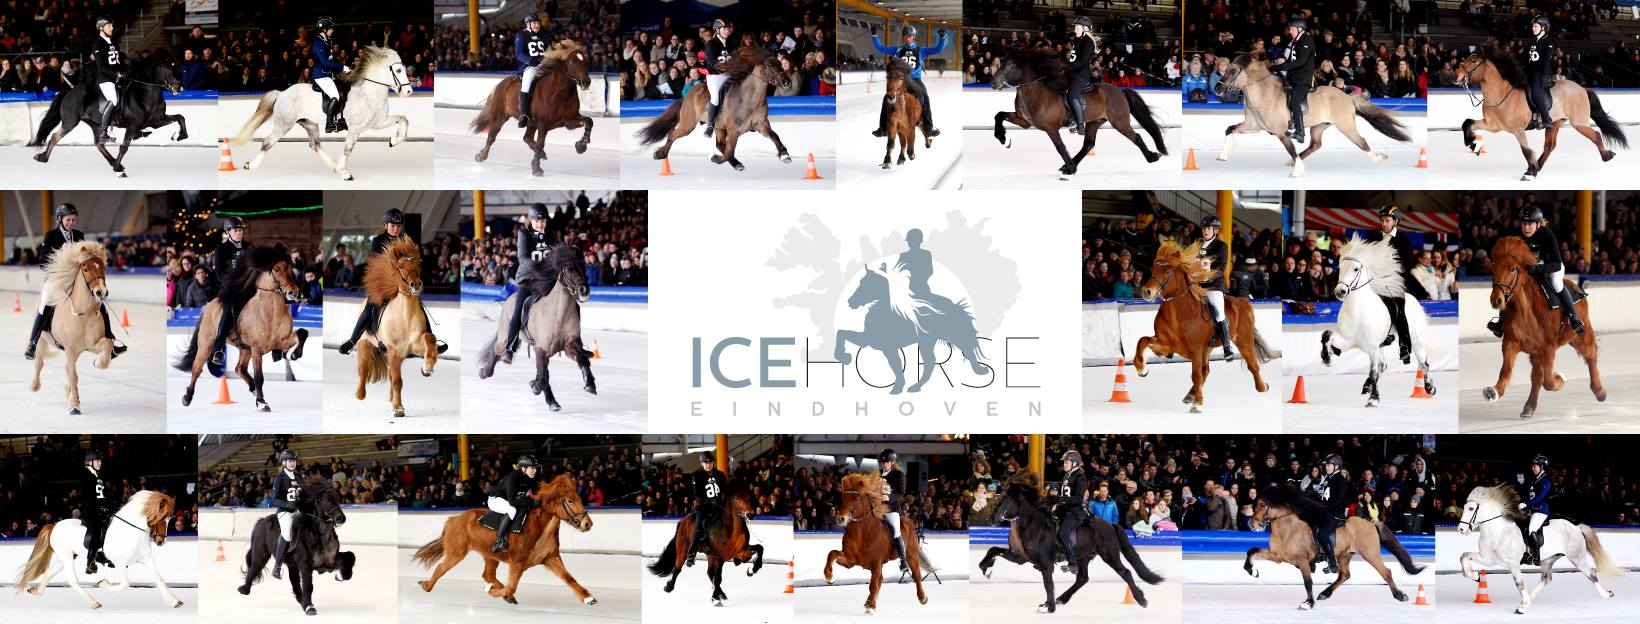 Horses on Ice